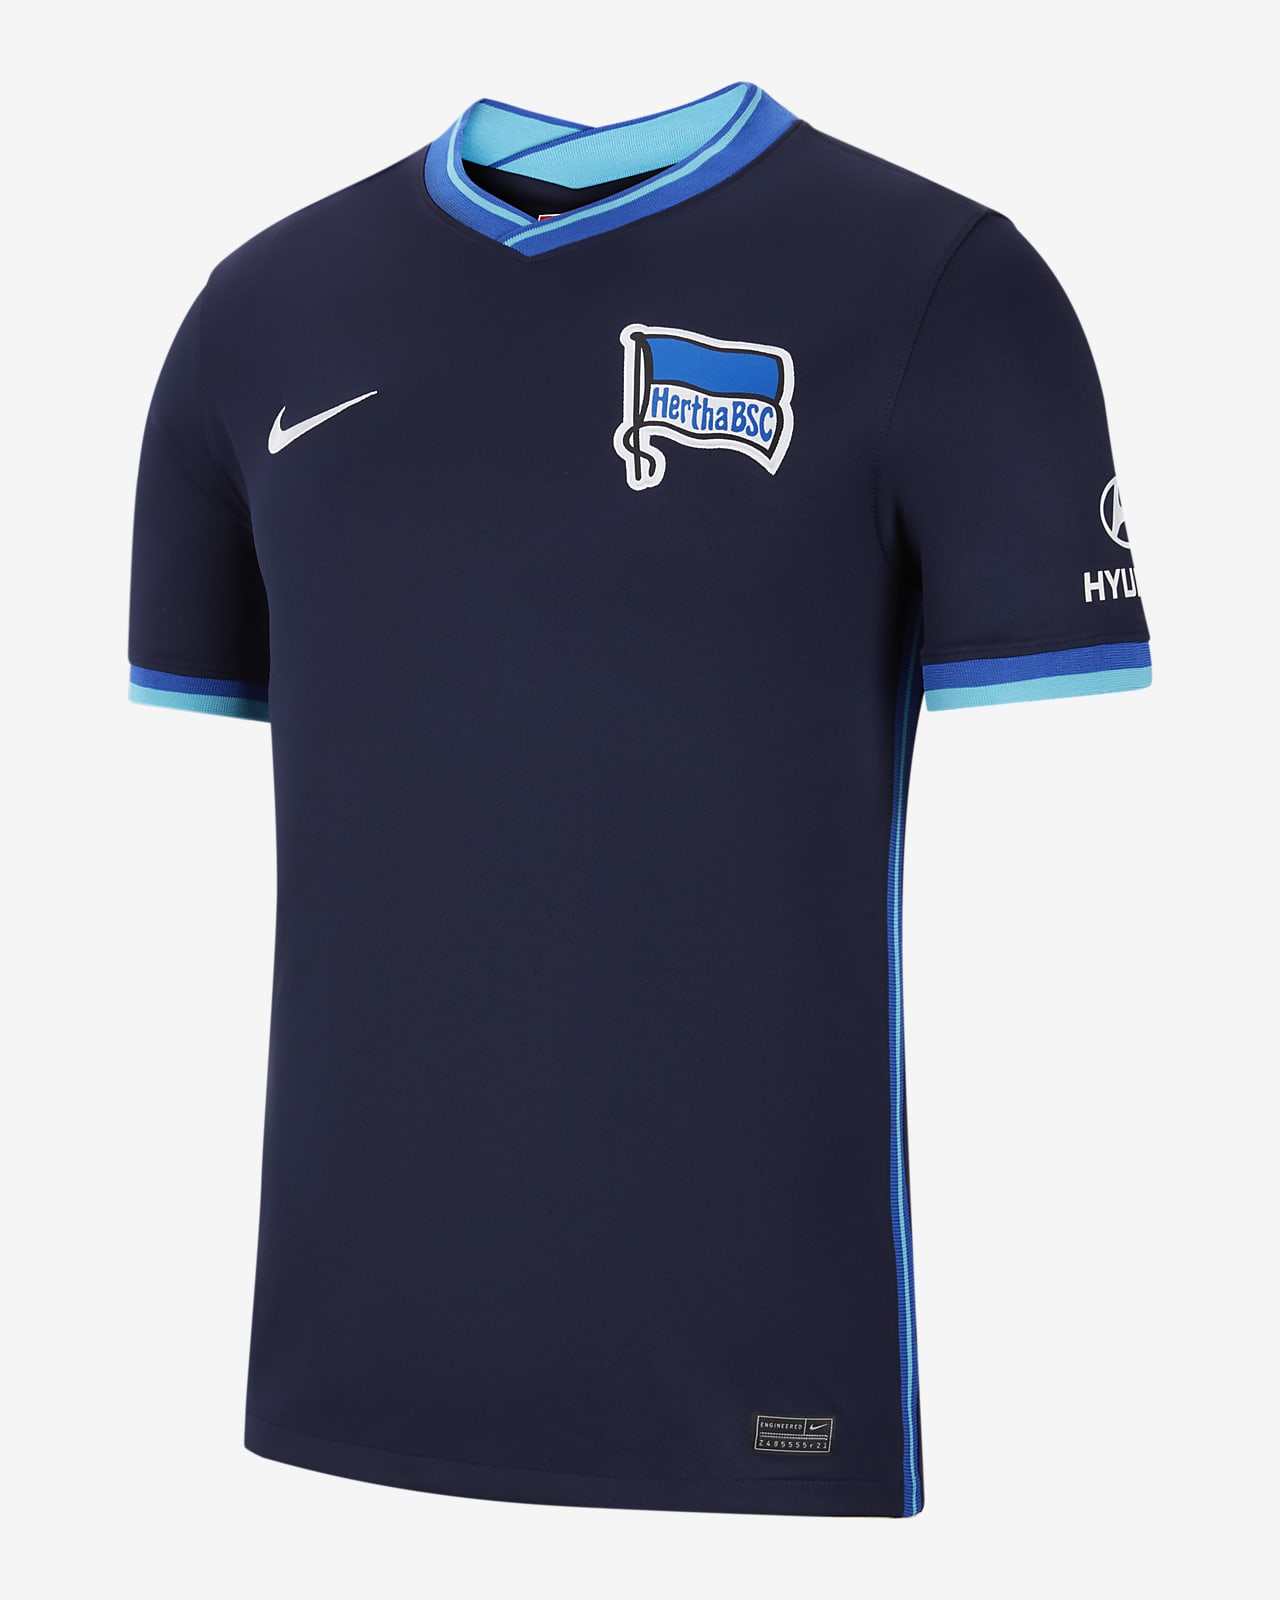 Hertha BSC 2021/22 Stadium Away Men's Football Shirt. Nike RO